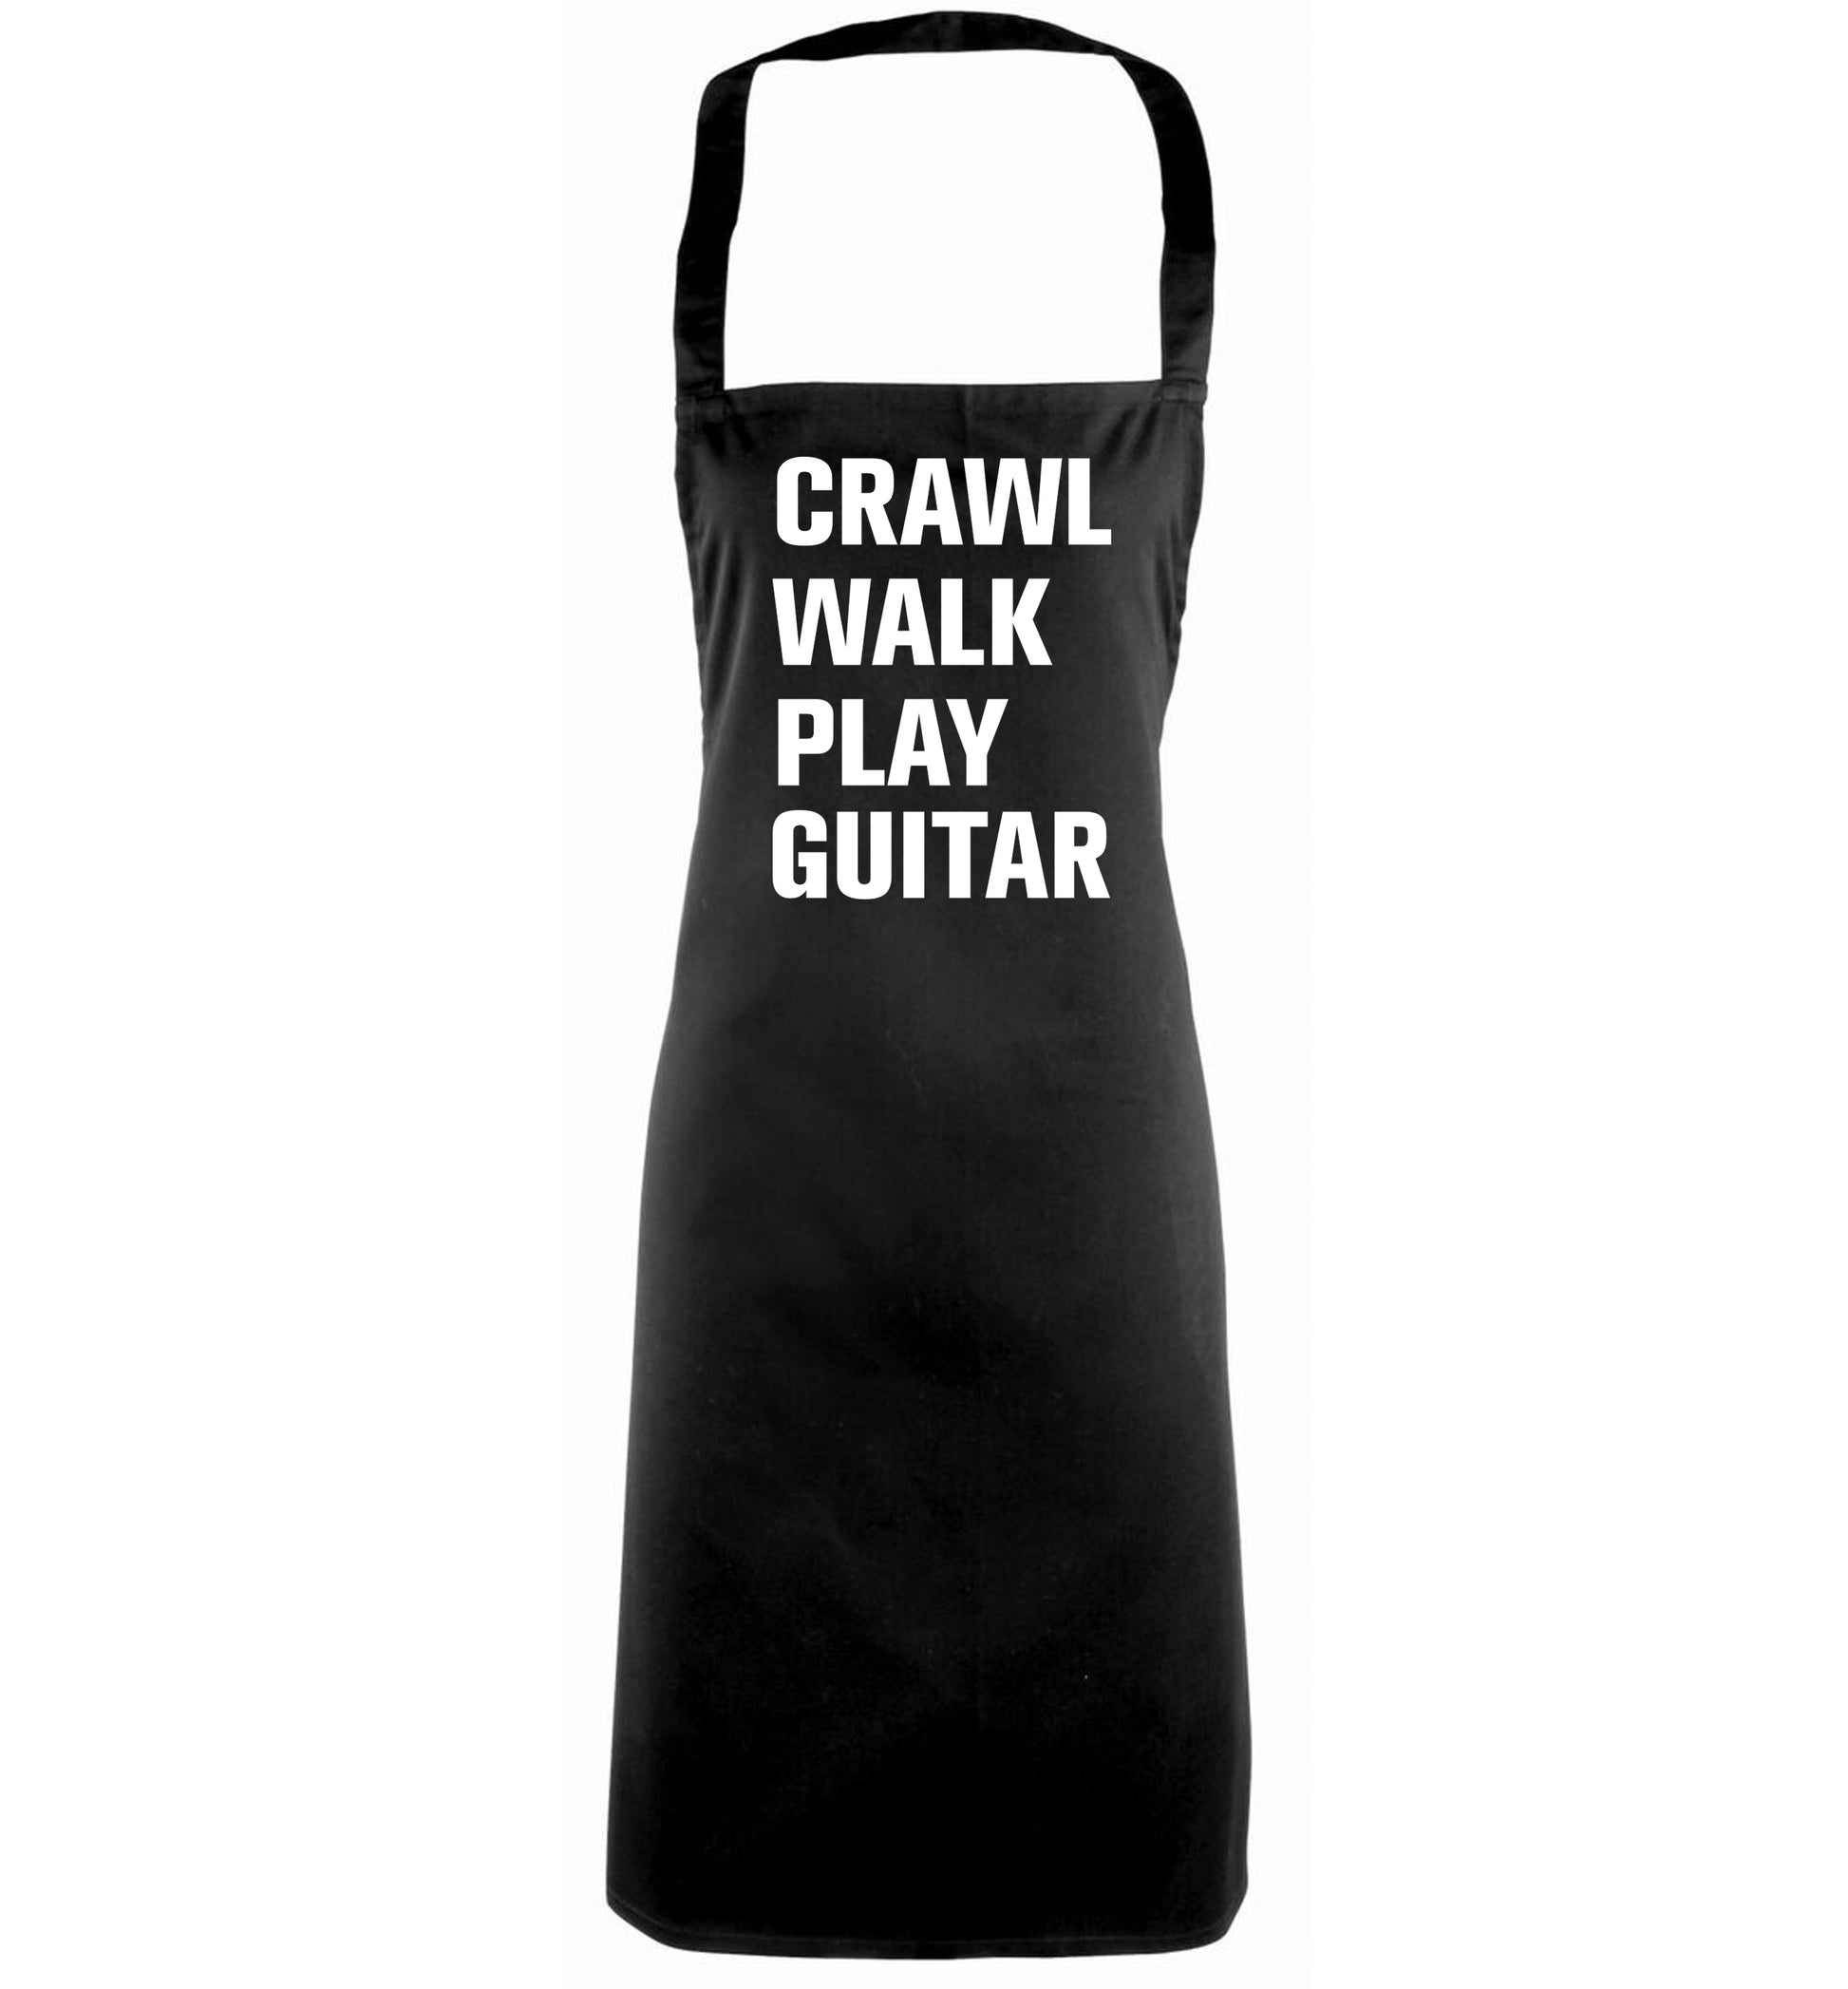 Crawl walk play guitar black apron